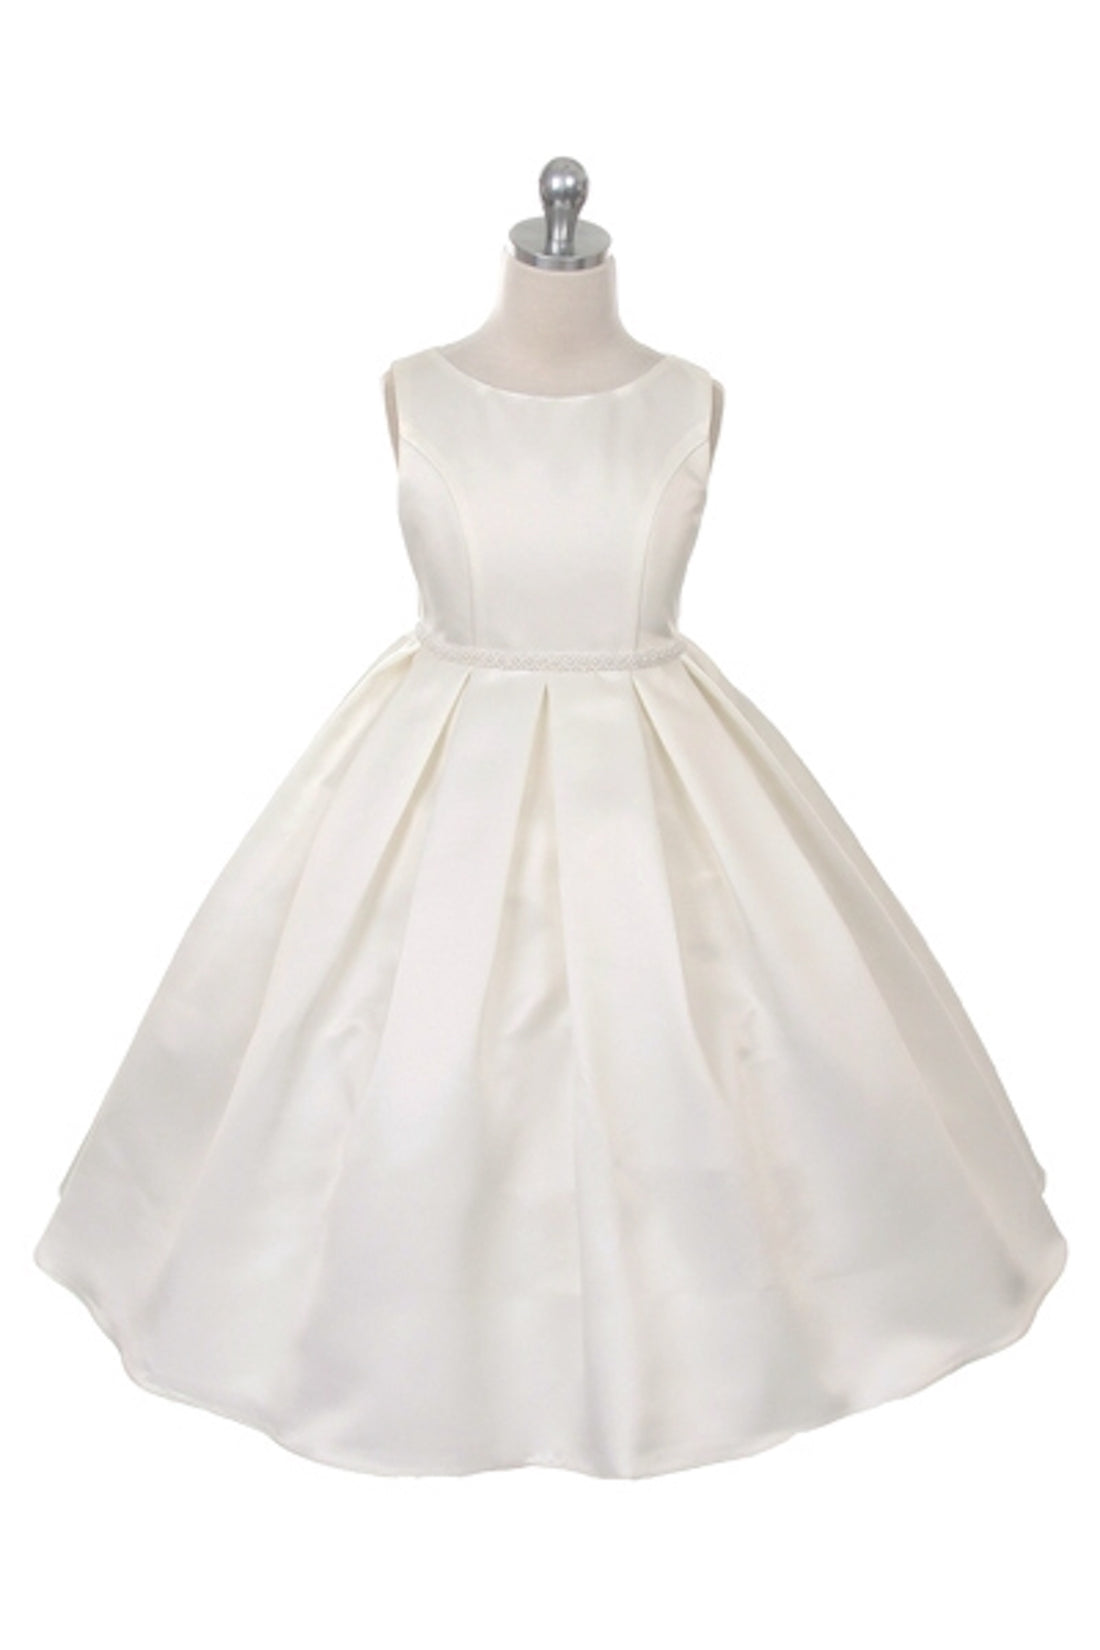 Classic Pleated Flower Girl Dress by AS235 Kids Dream - Girl Formal Dresses